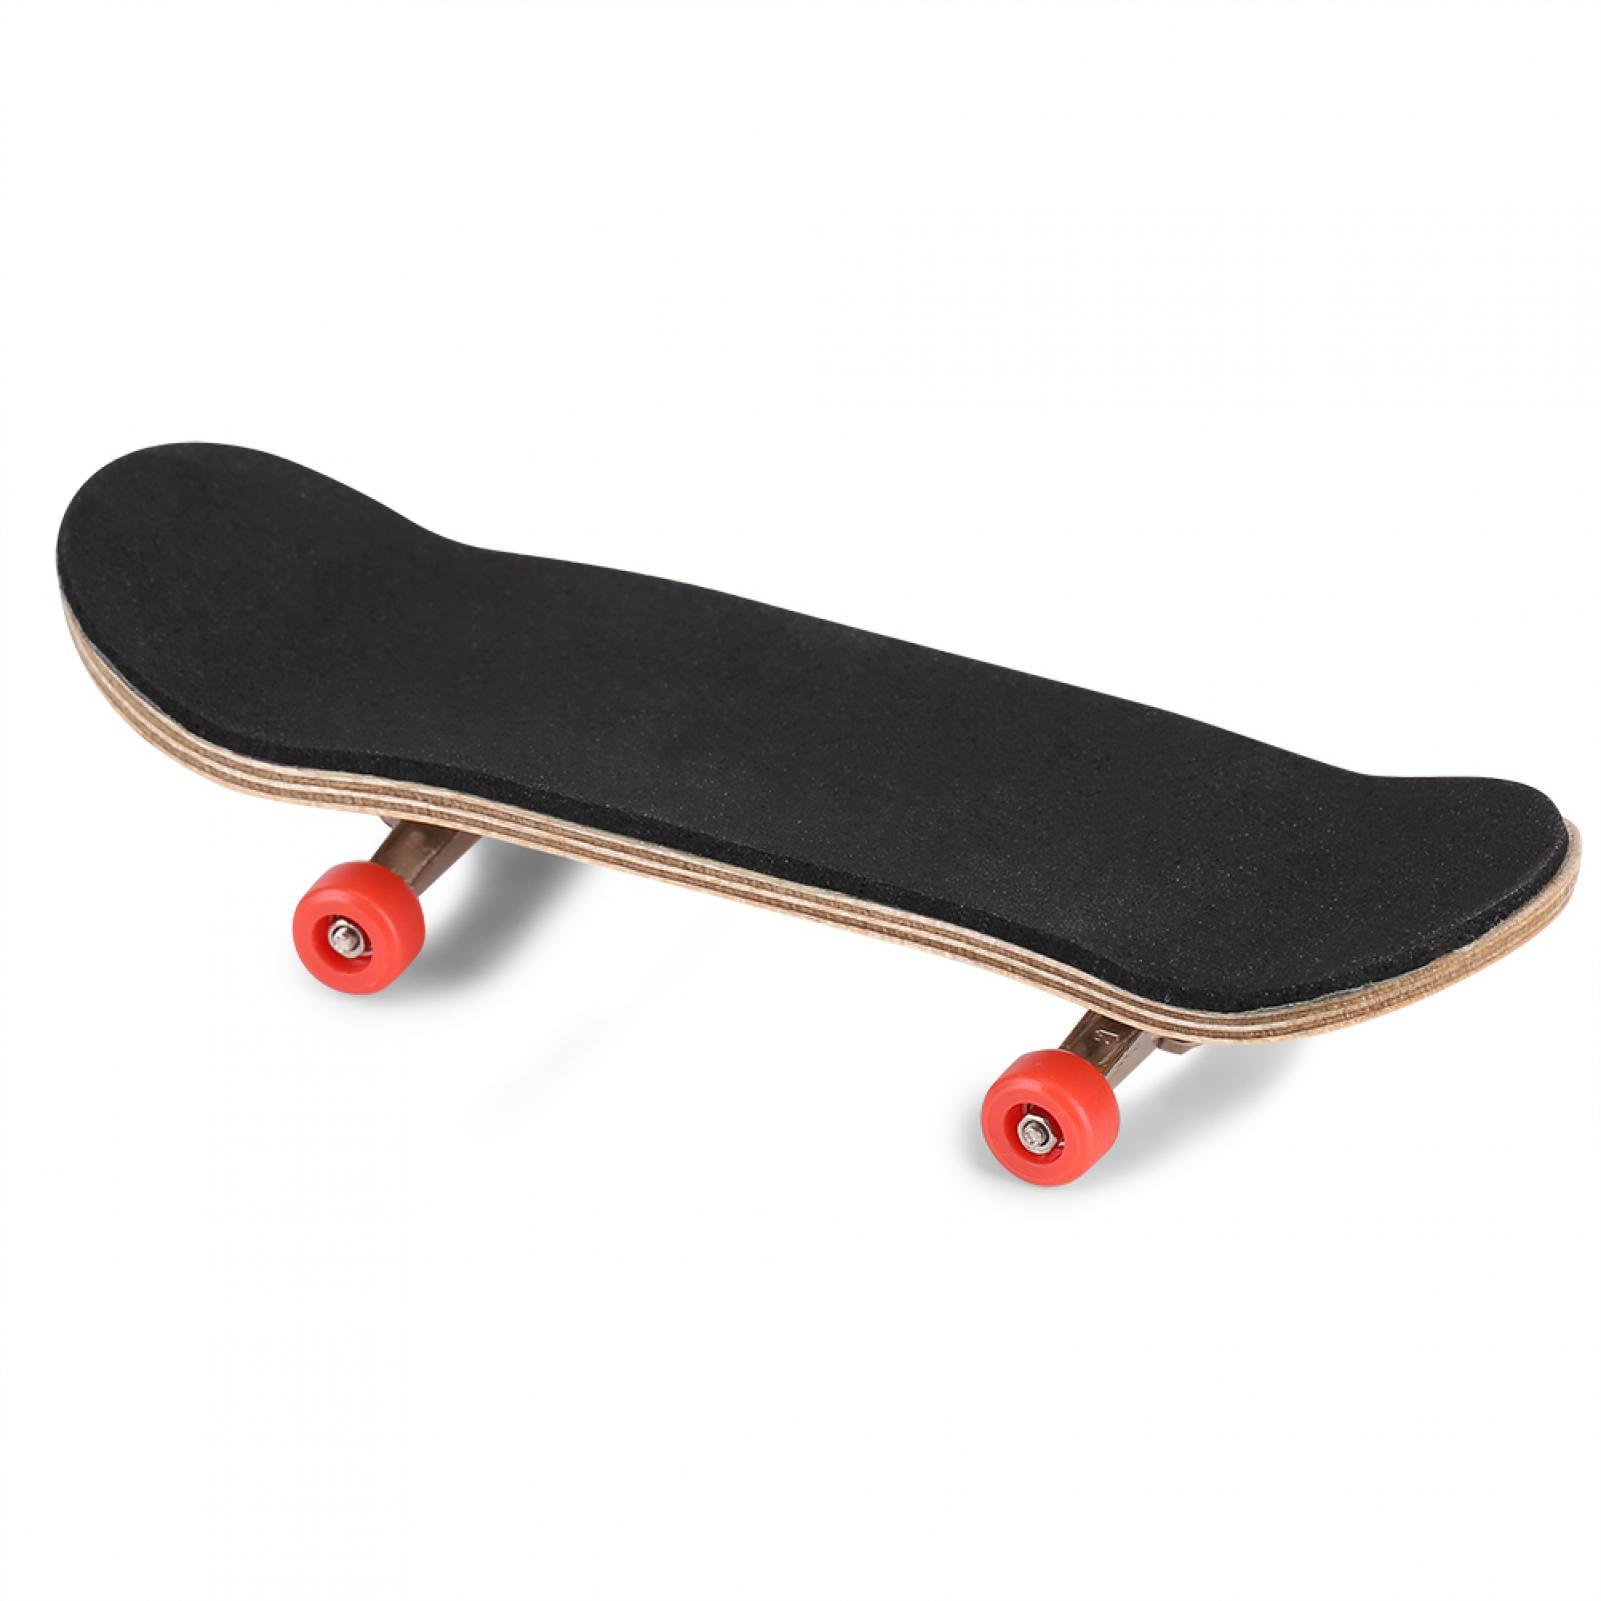 Professional Mini Fingerboards,1Pc Maple Wooden+Alloy Fingerboard Finger Skateboards with Box Reduce Pressure Kids Gifts Finger Skateboard Black